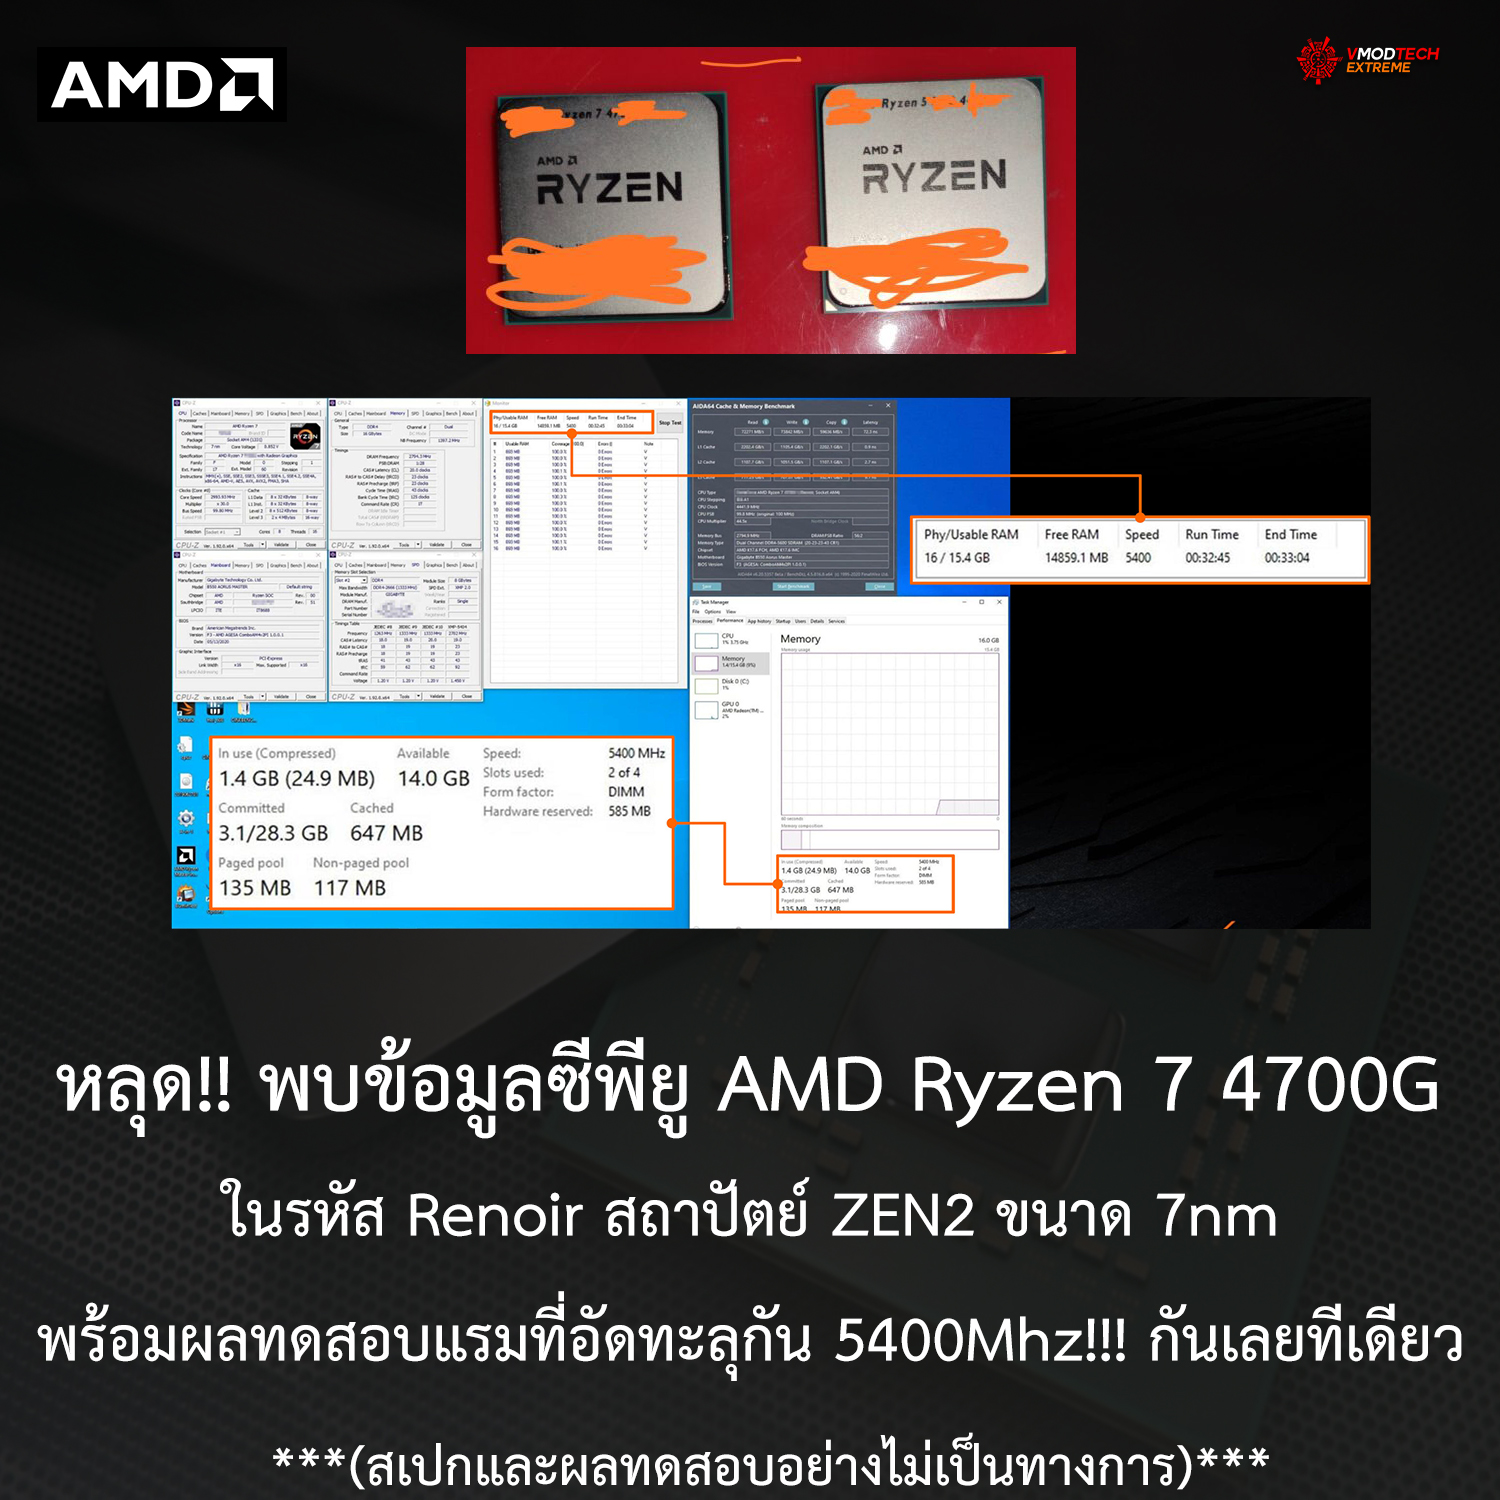 amd ryzen 7 4700g benchmark หลุด!! พบข้อมูลซีพียู AMD Ryzen 7 4700G ในรหัส Renoir สถาปัตย์ ZEN2 ขนาด 7nm พร้อมผลทดสอบแรมที่อัดทะลุกัน 5400Mhz!!! กันเลยทีเดียว 